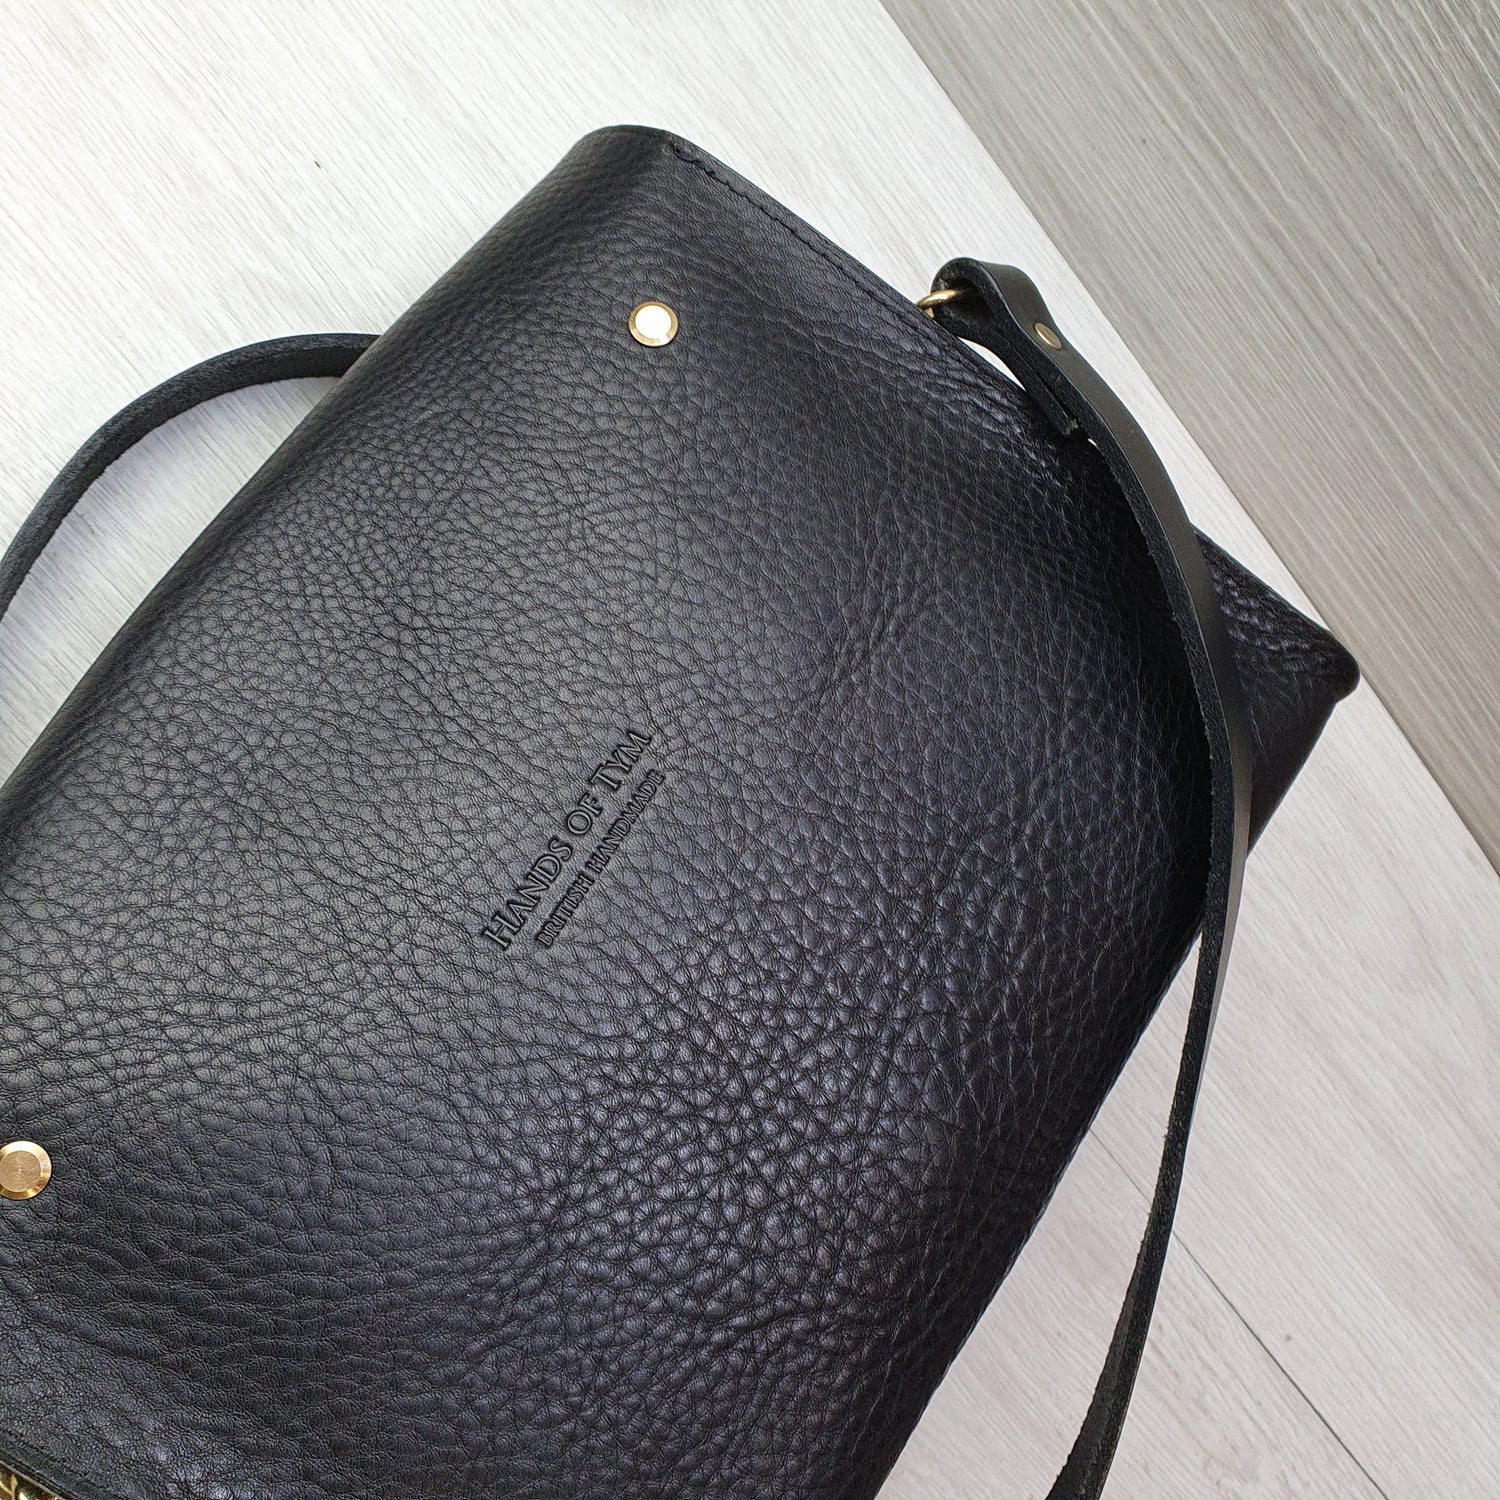 Hands of Tym Handbags 'Hickory Satchel' Bespoke Handmade Luxury Leather Cross Body Bag Black